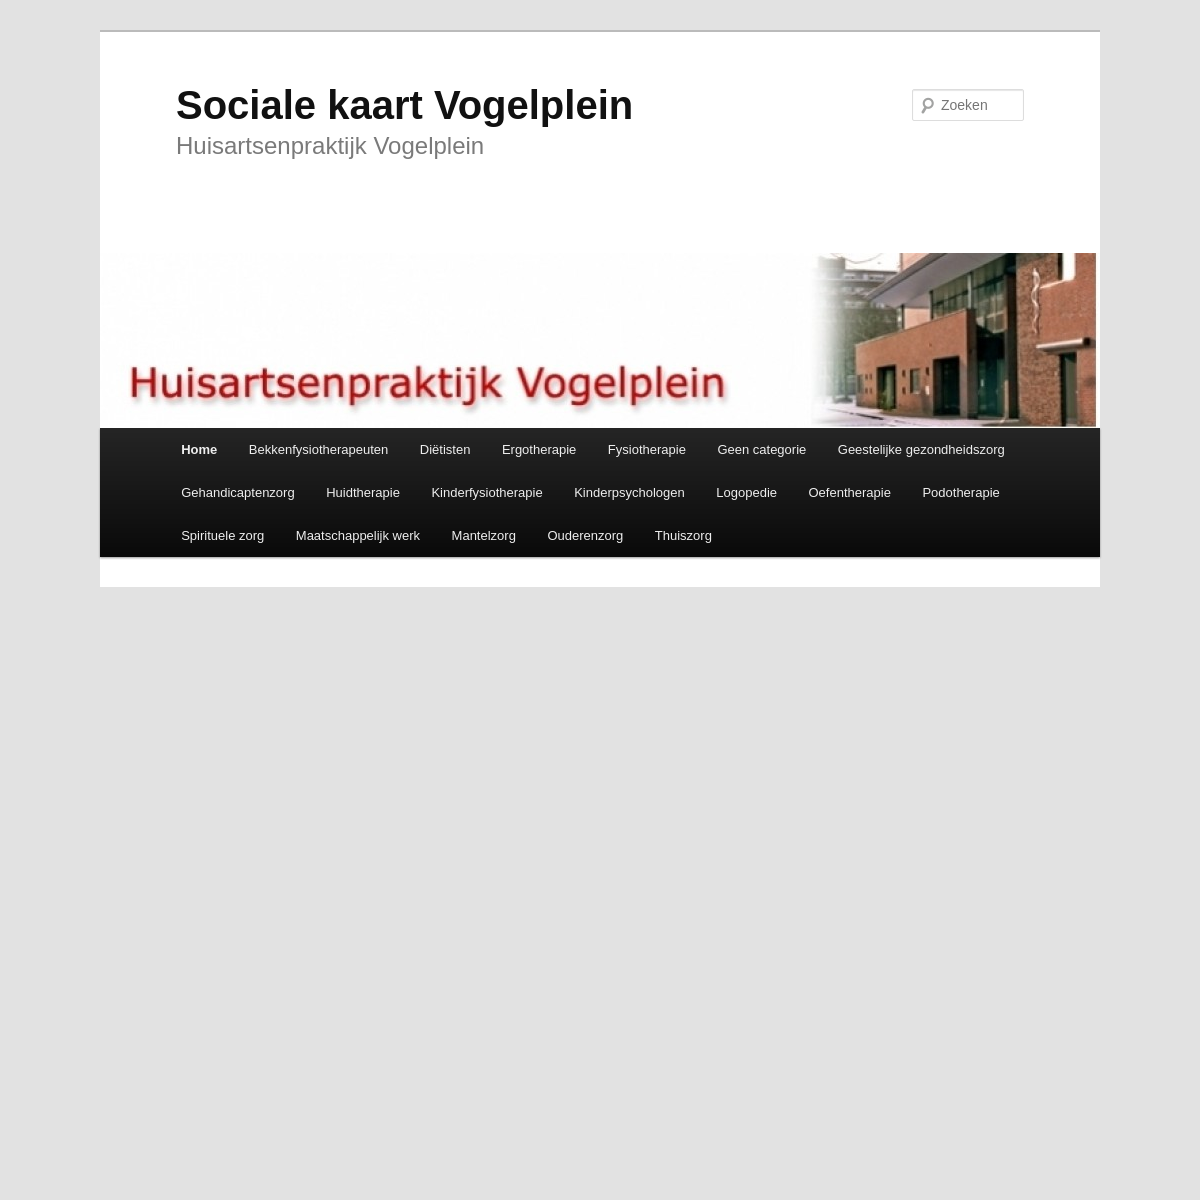 A complete backup of socialekaartvogelplein.nl